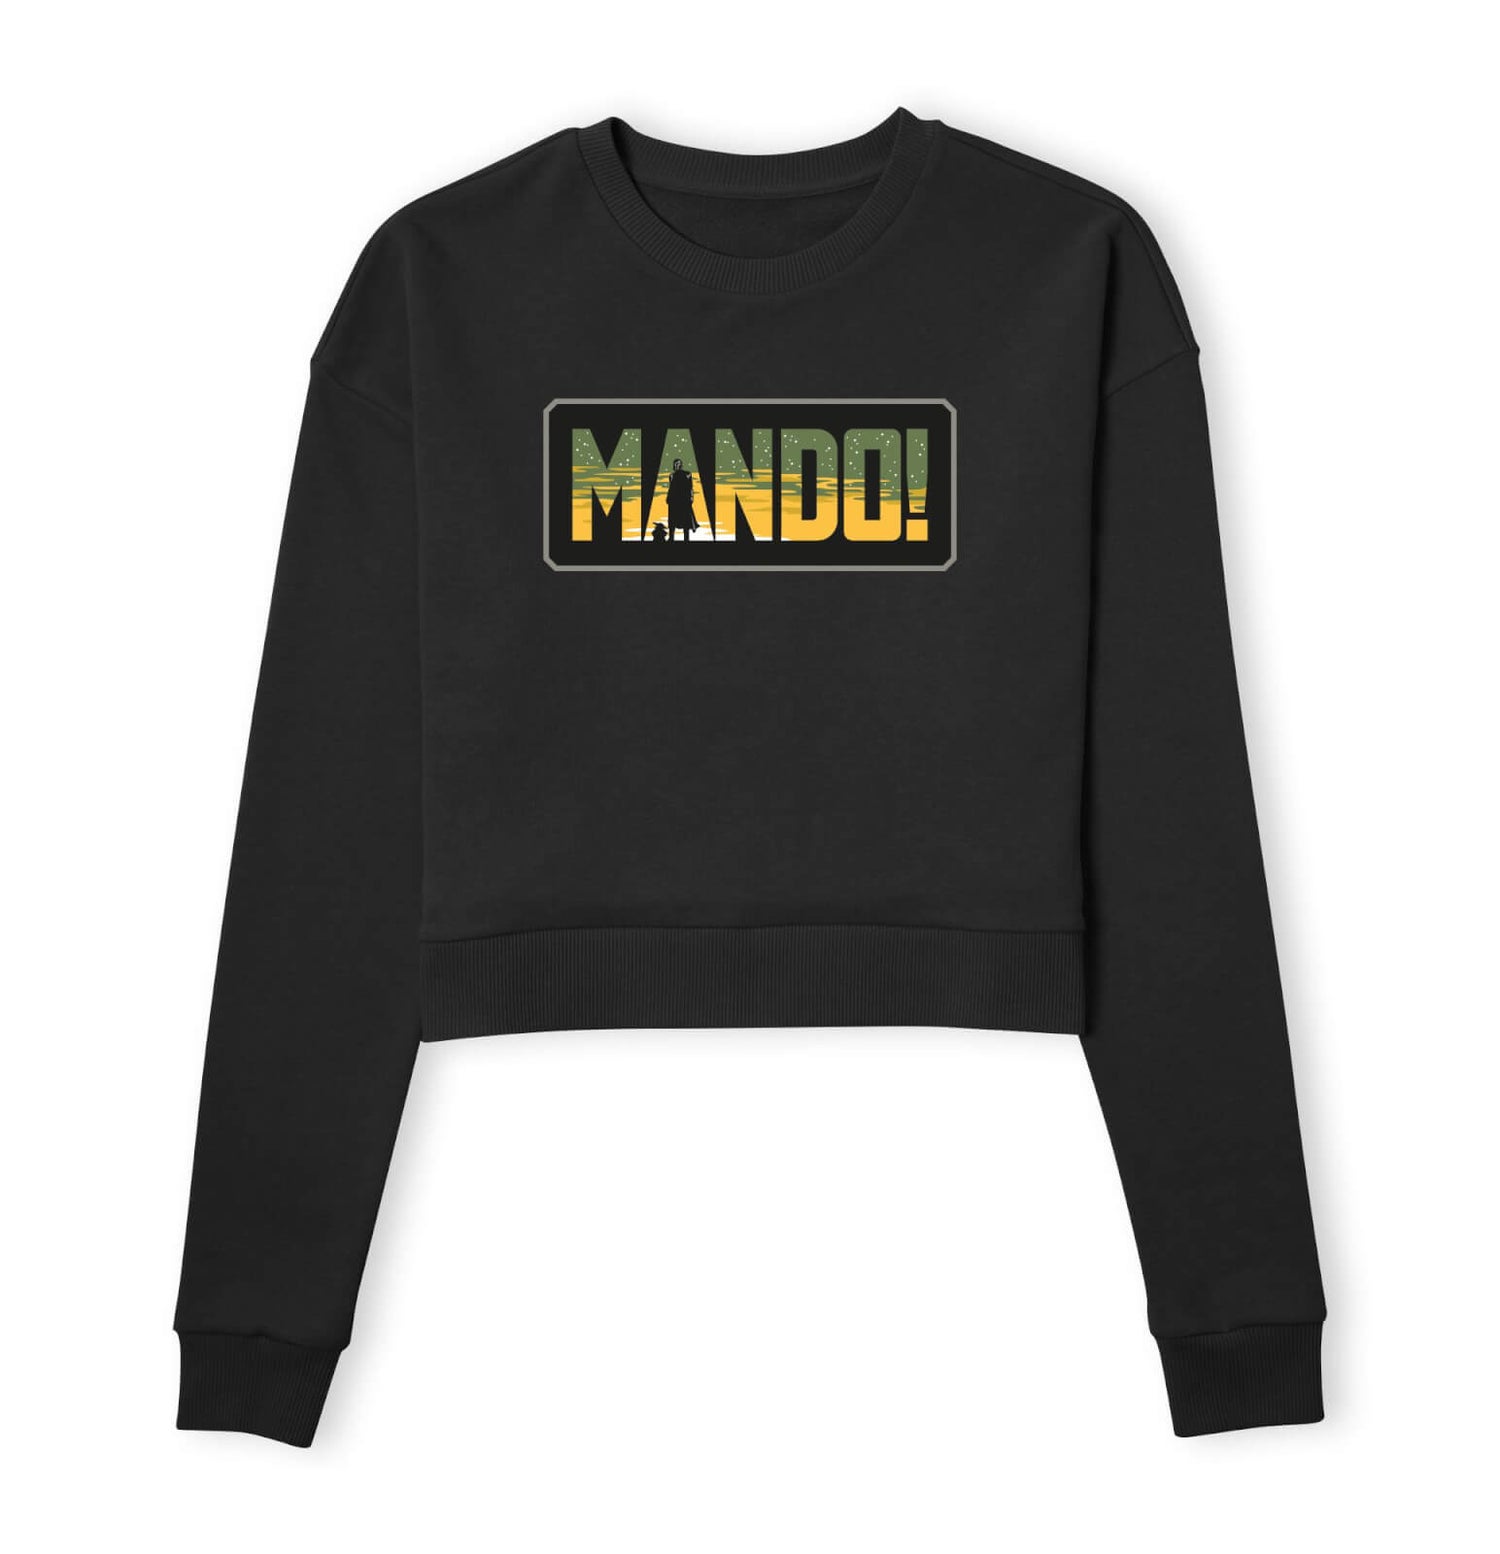 Star Wars The Mandalorian Mando! Women's Cropped Sweatshirt - Black